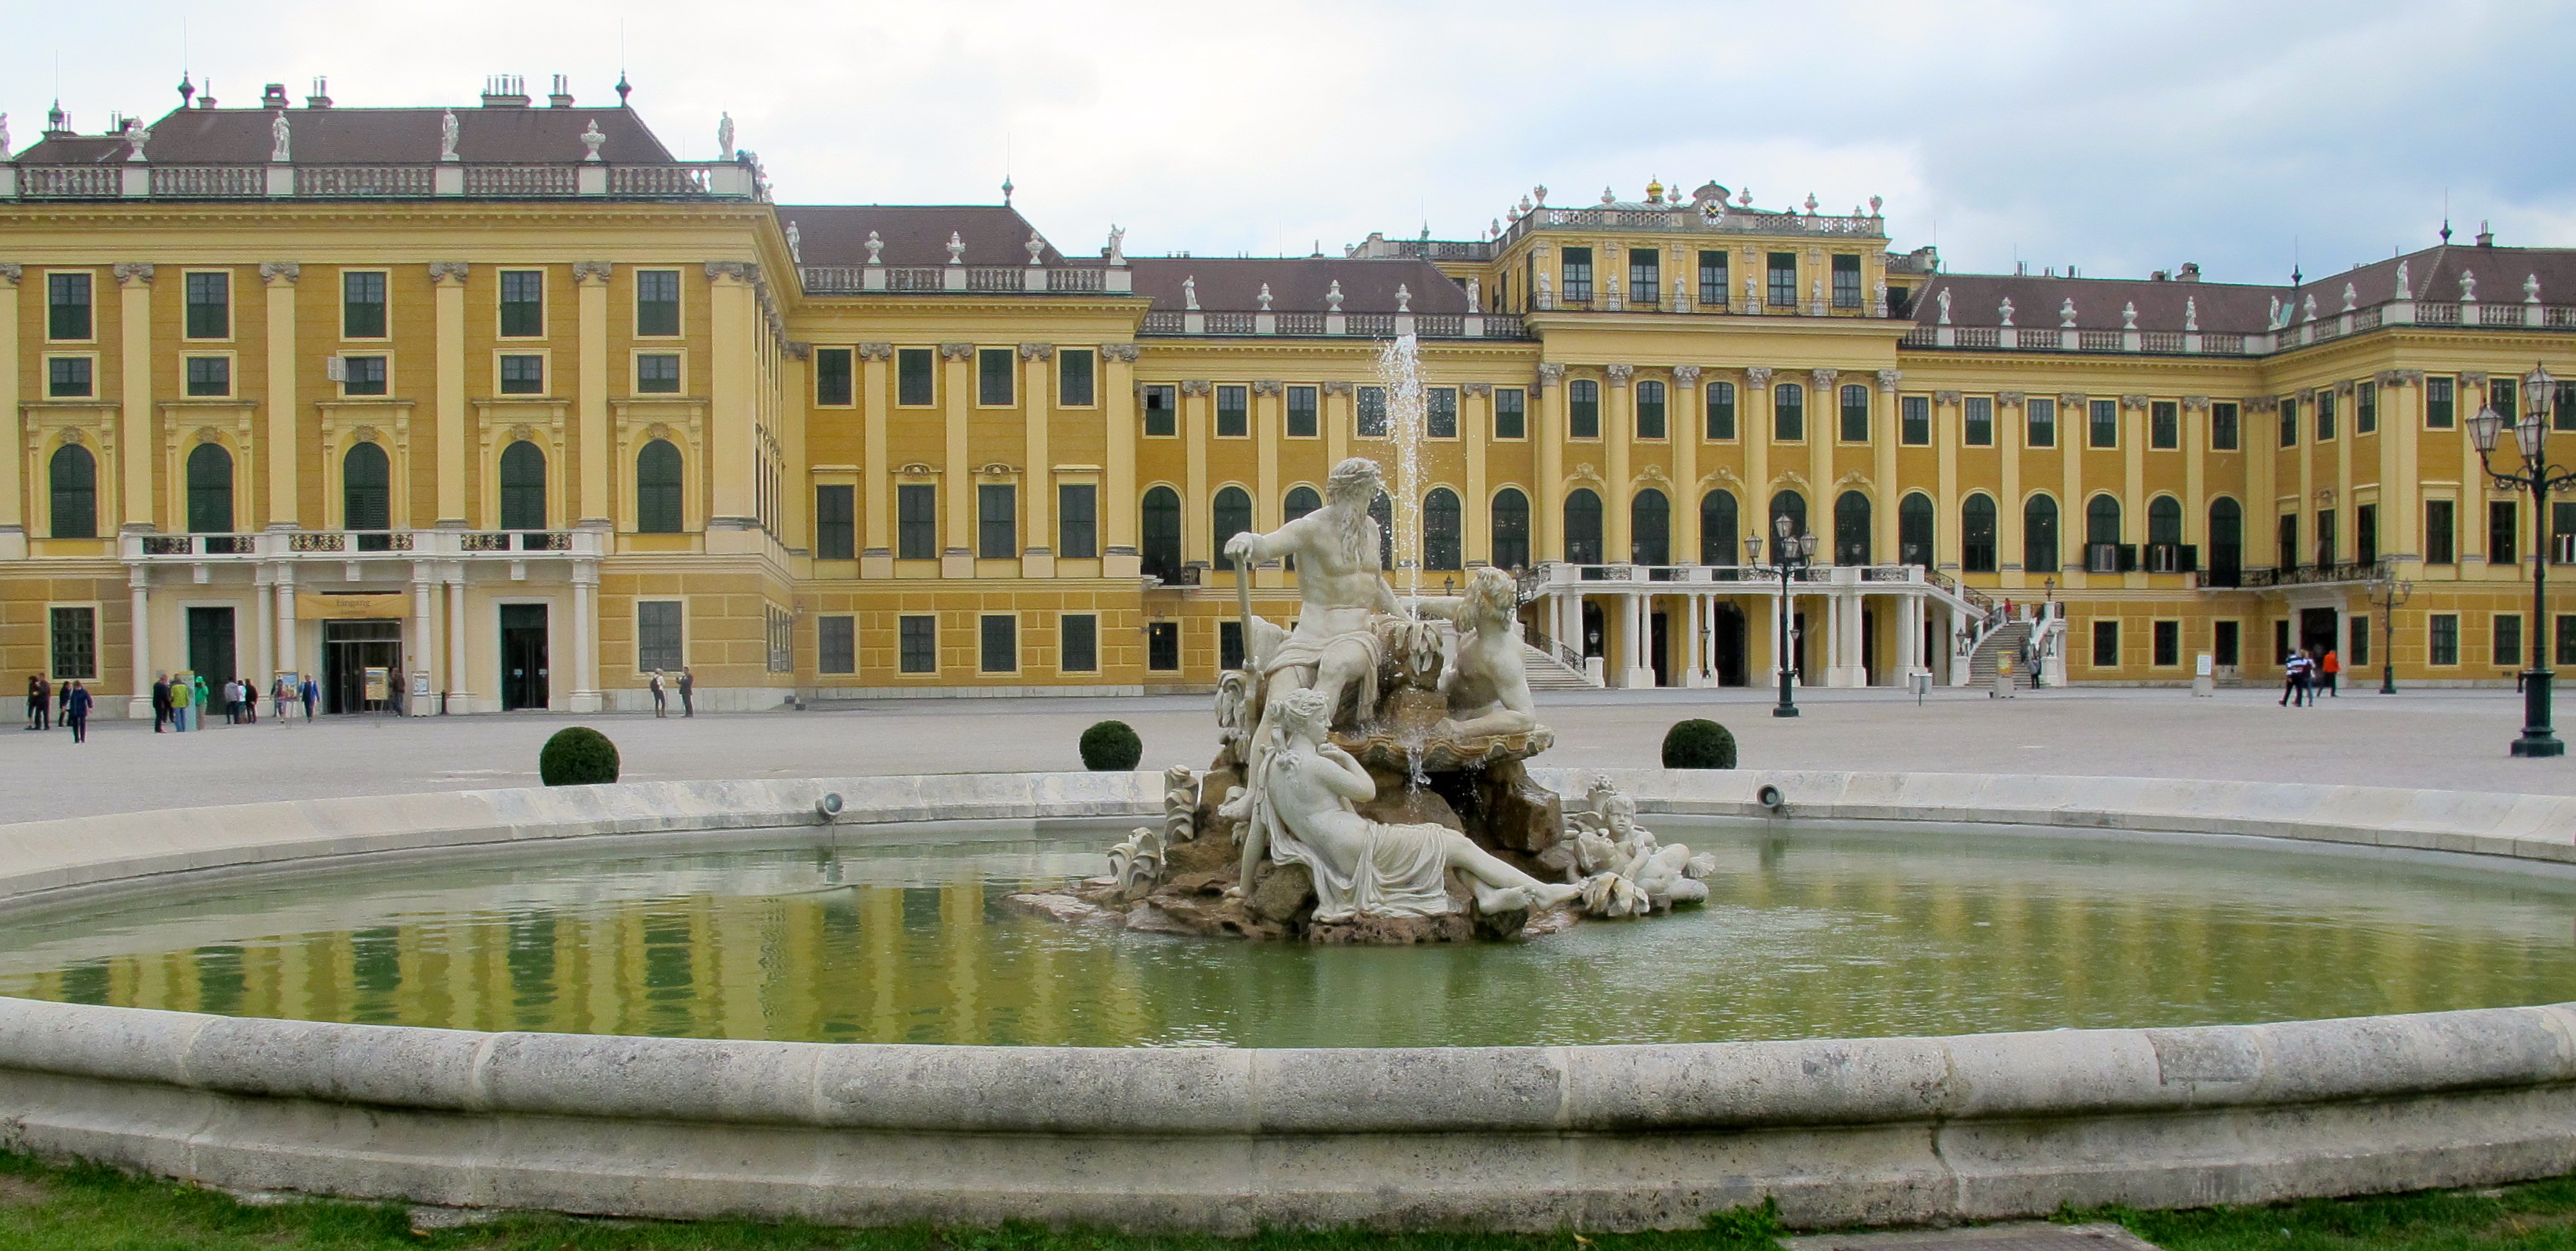 The resplendent Habsburg summer palace - Schönbrunn - is Austria's top tourist destination.